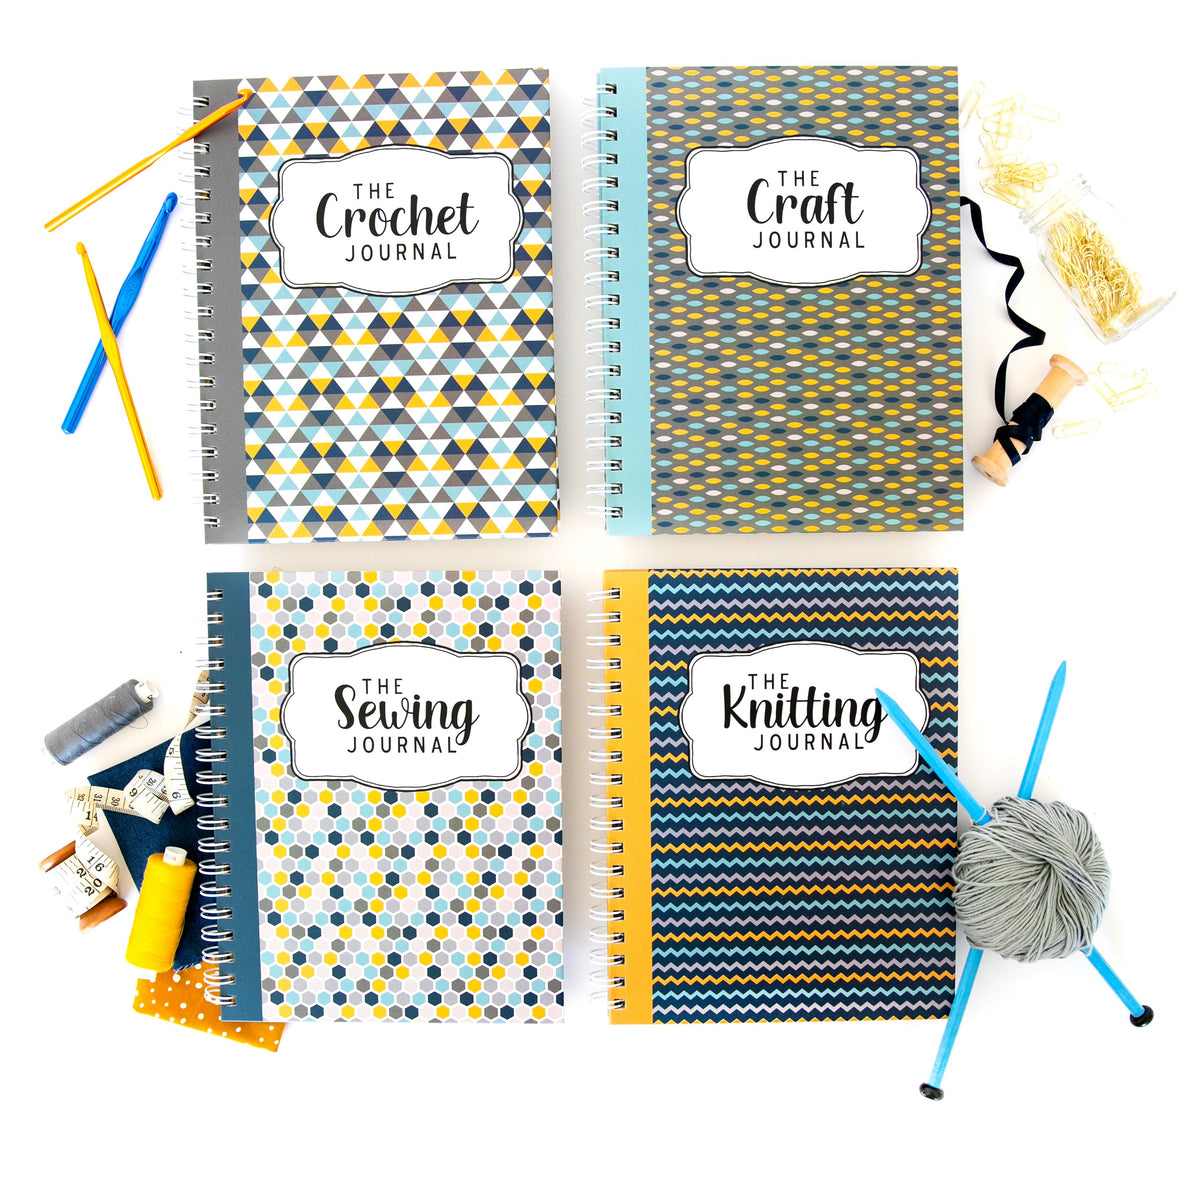 The Knitting Journal – Creative Journals UK